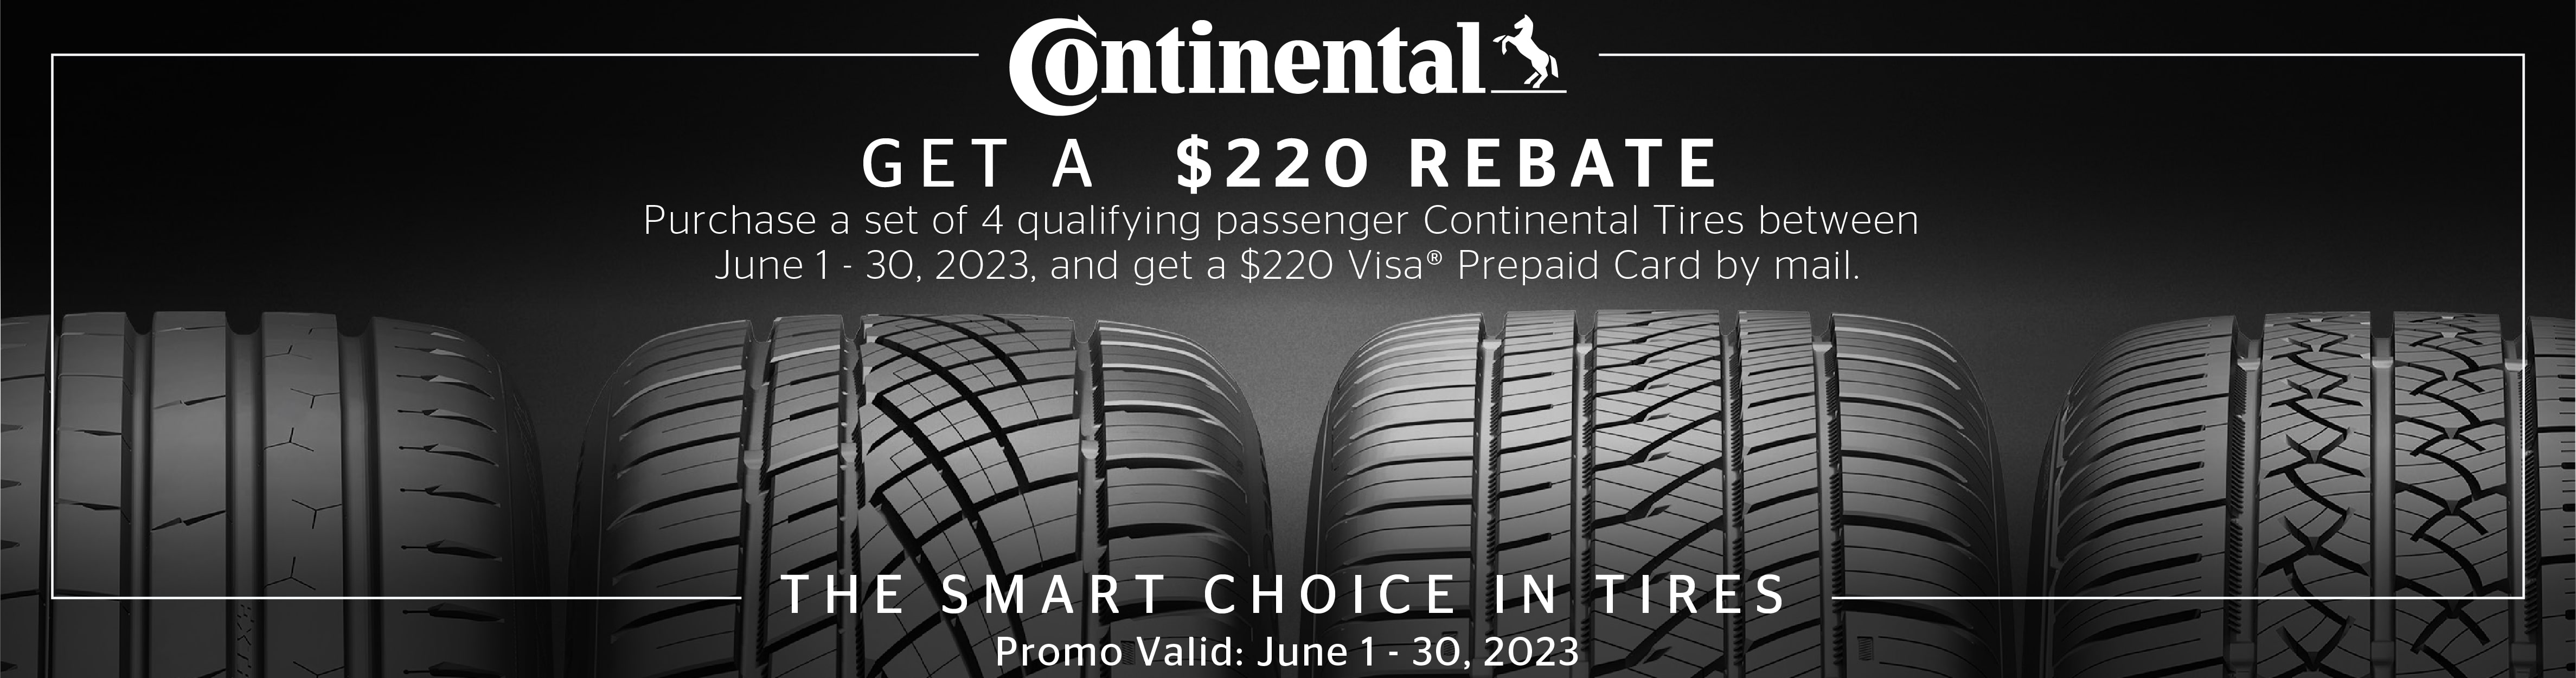 Continental Tire Rebate June 2023 Giga tires